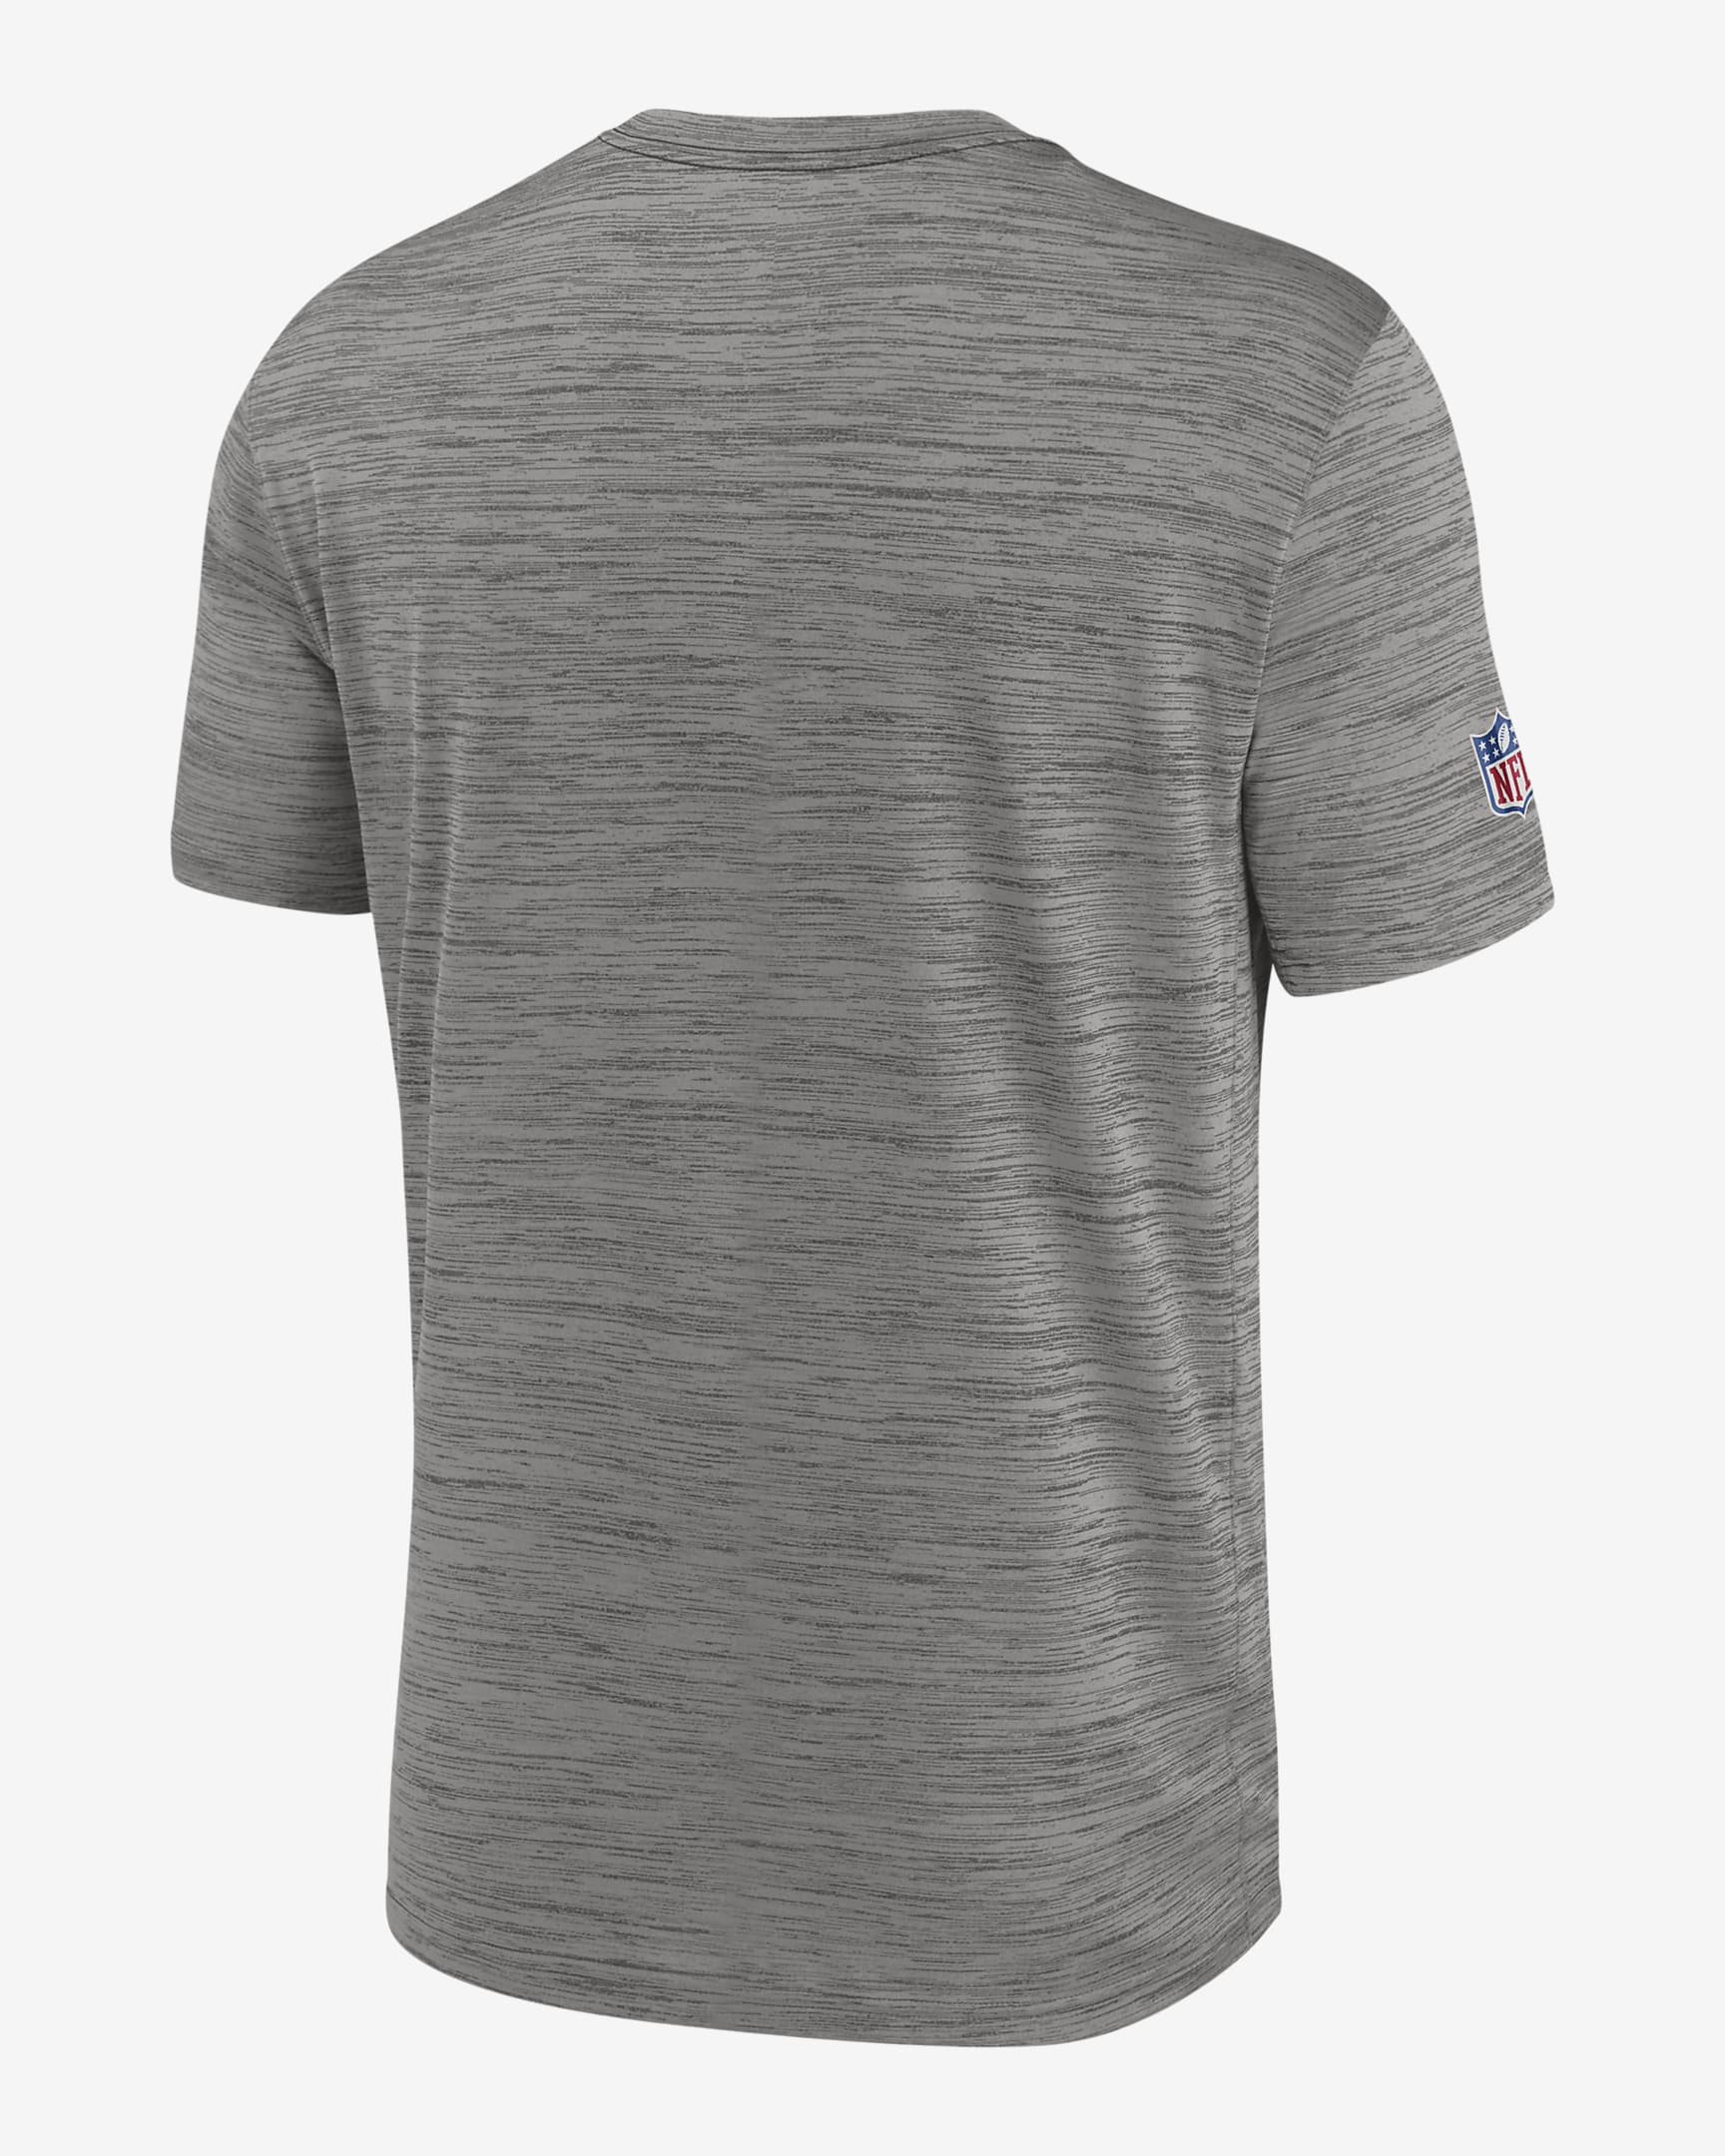 Nike Dri-FIT Team (NFL New Orleans Saints) Men's T-Shirt. Nike.com